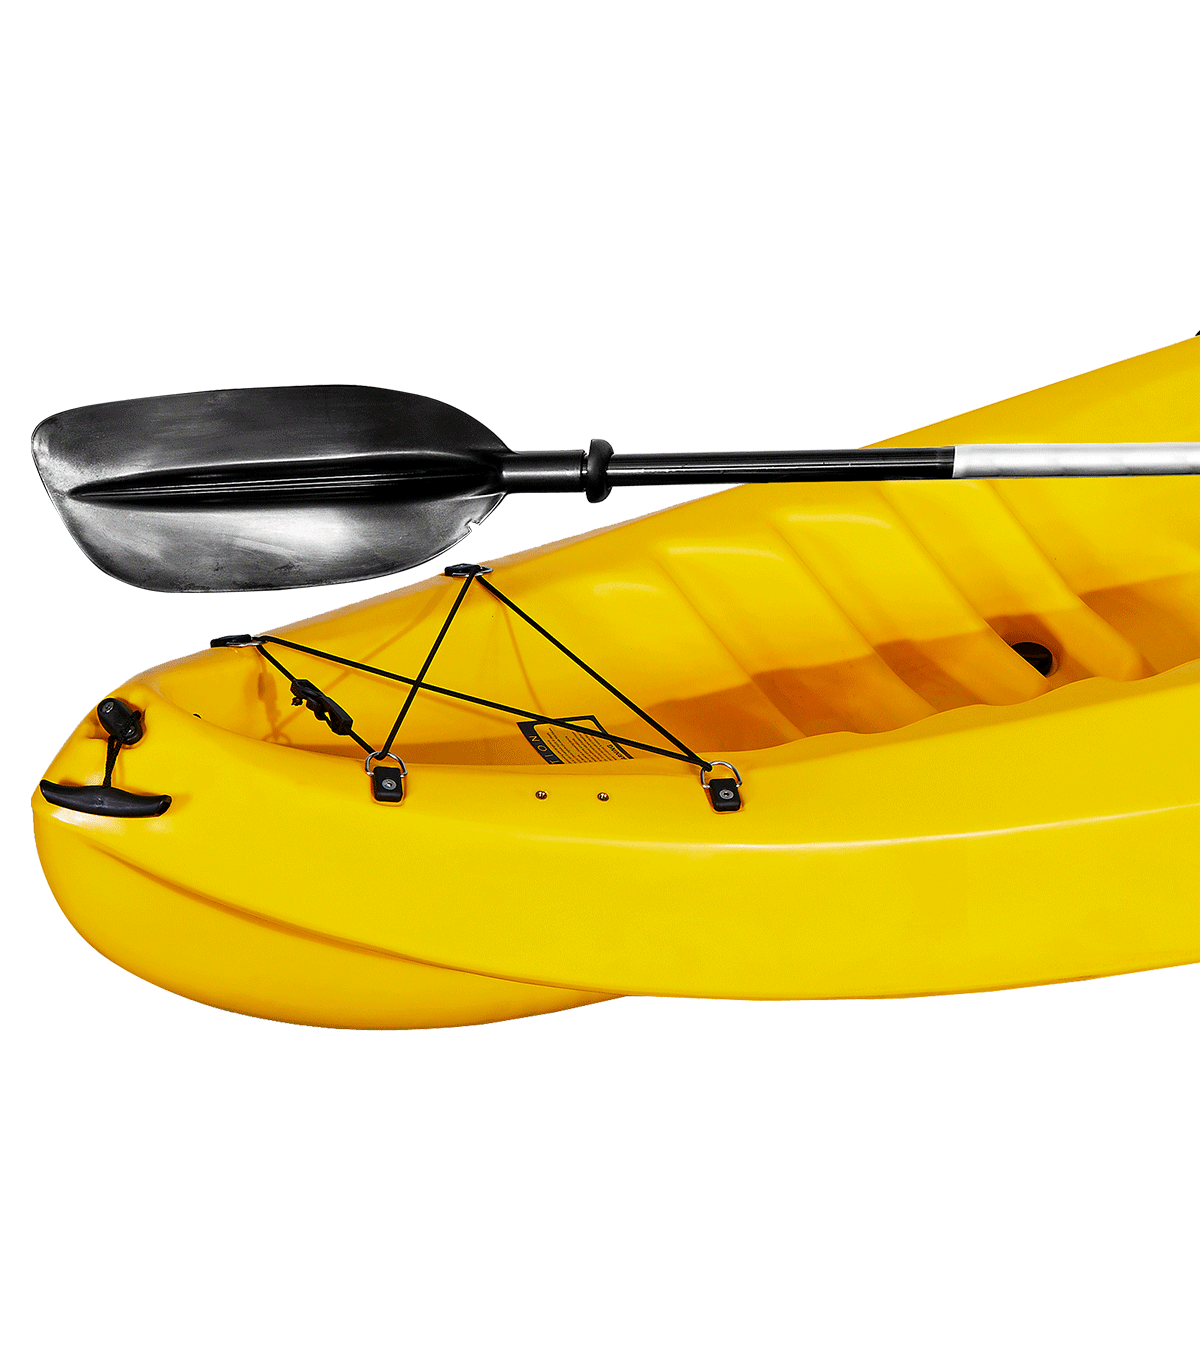 Kayak De Recreo Individual Kol Outdoor Mola (270x80 Cm)  MKP